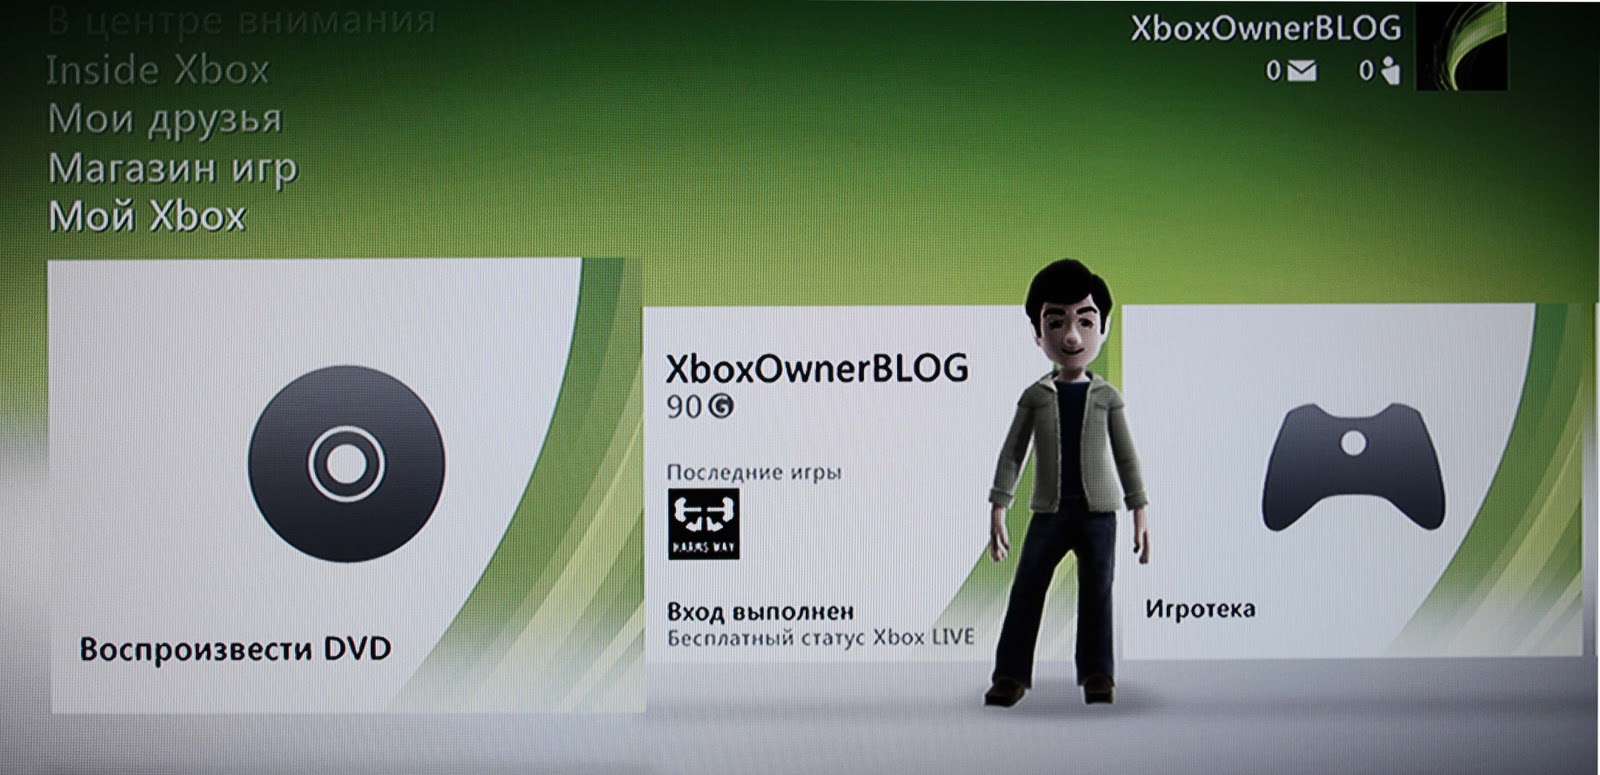 Без xbox live. Xbox 2010 года. Хбокс лайв кнопки. Индификатор устройства хбокс лайв. Игра иксбокс мой ресторан.